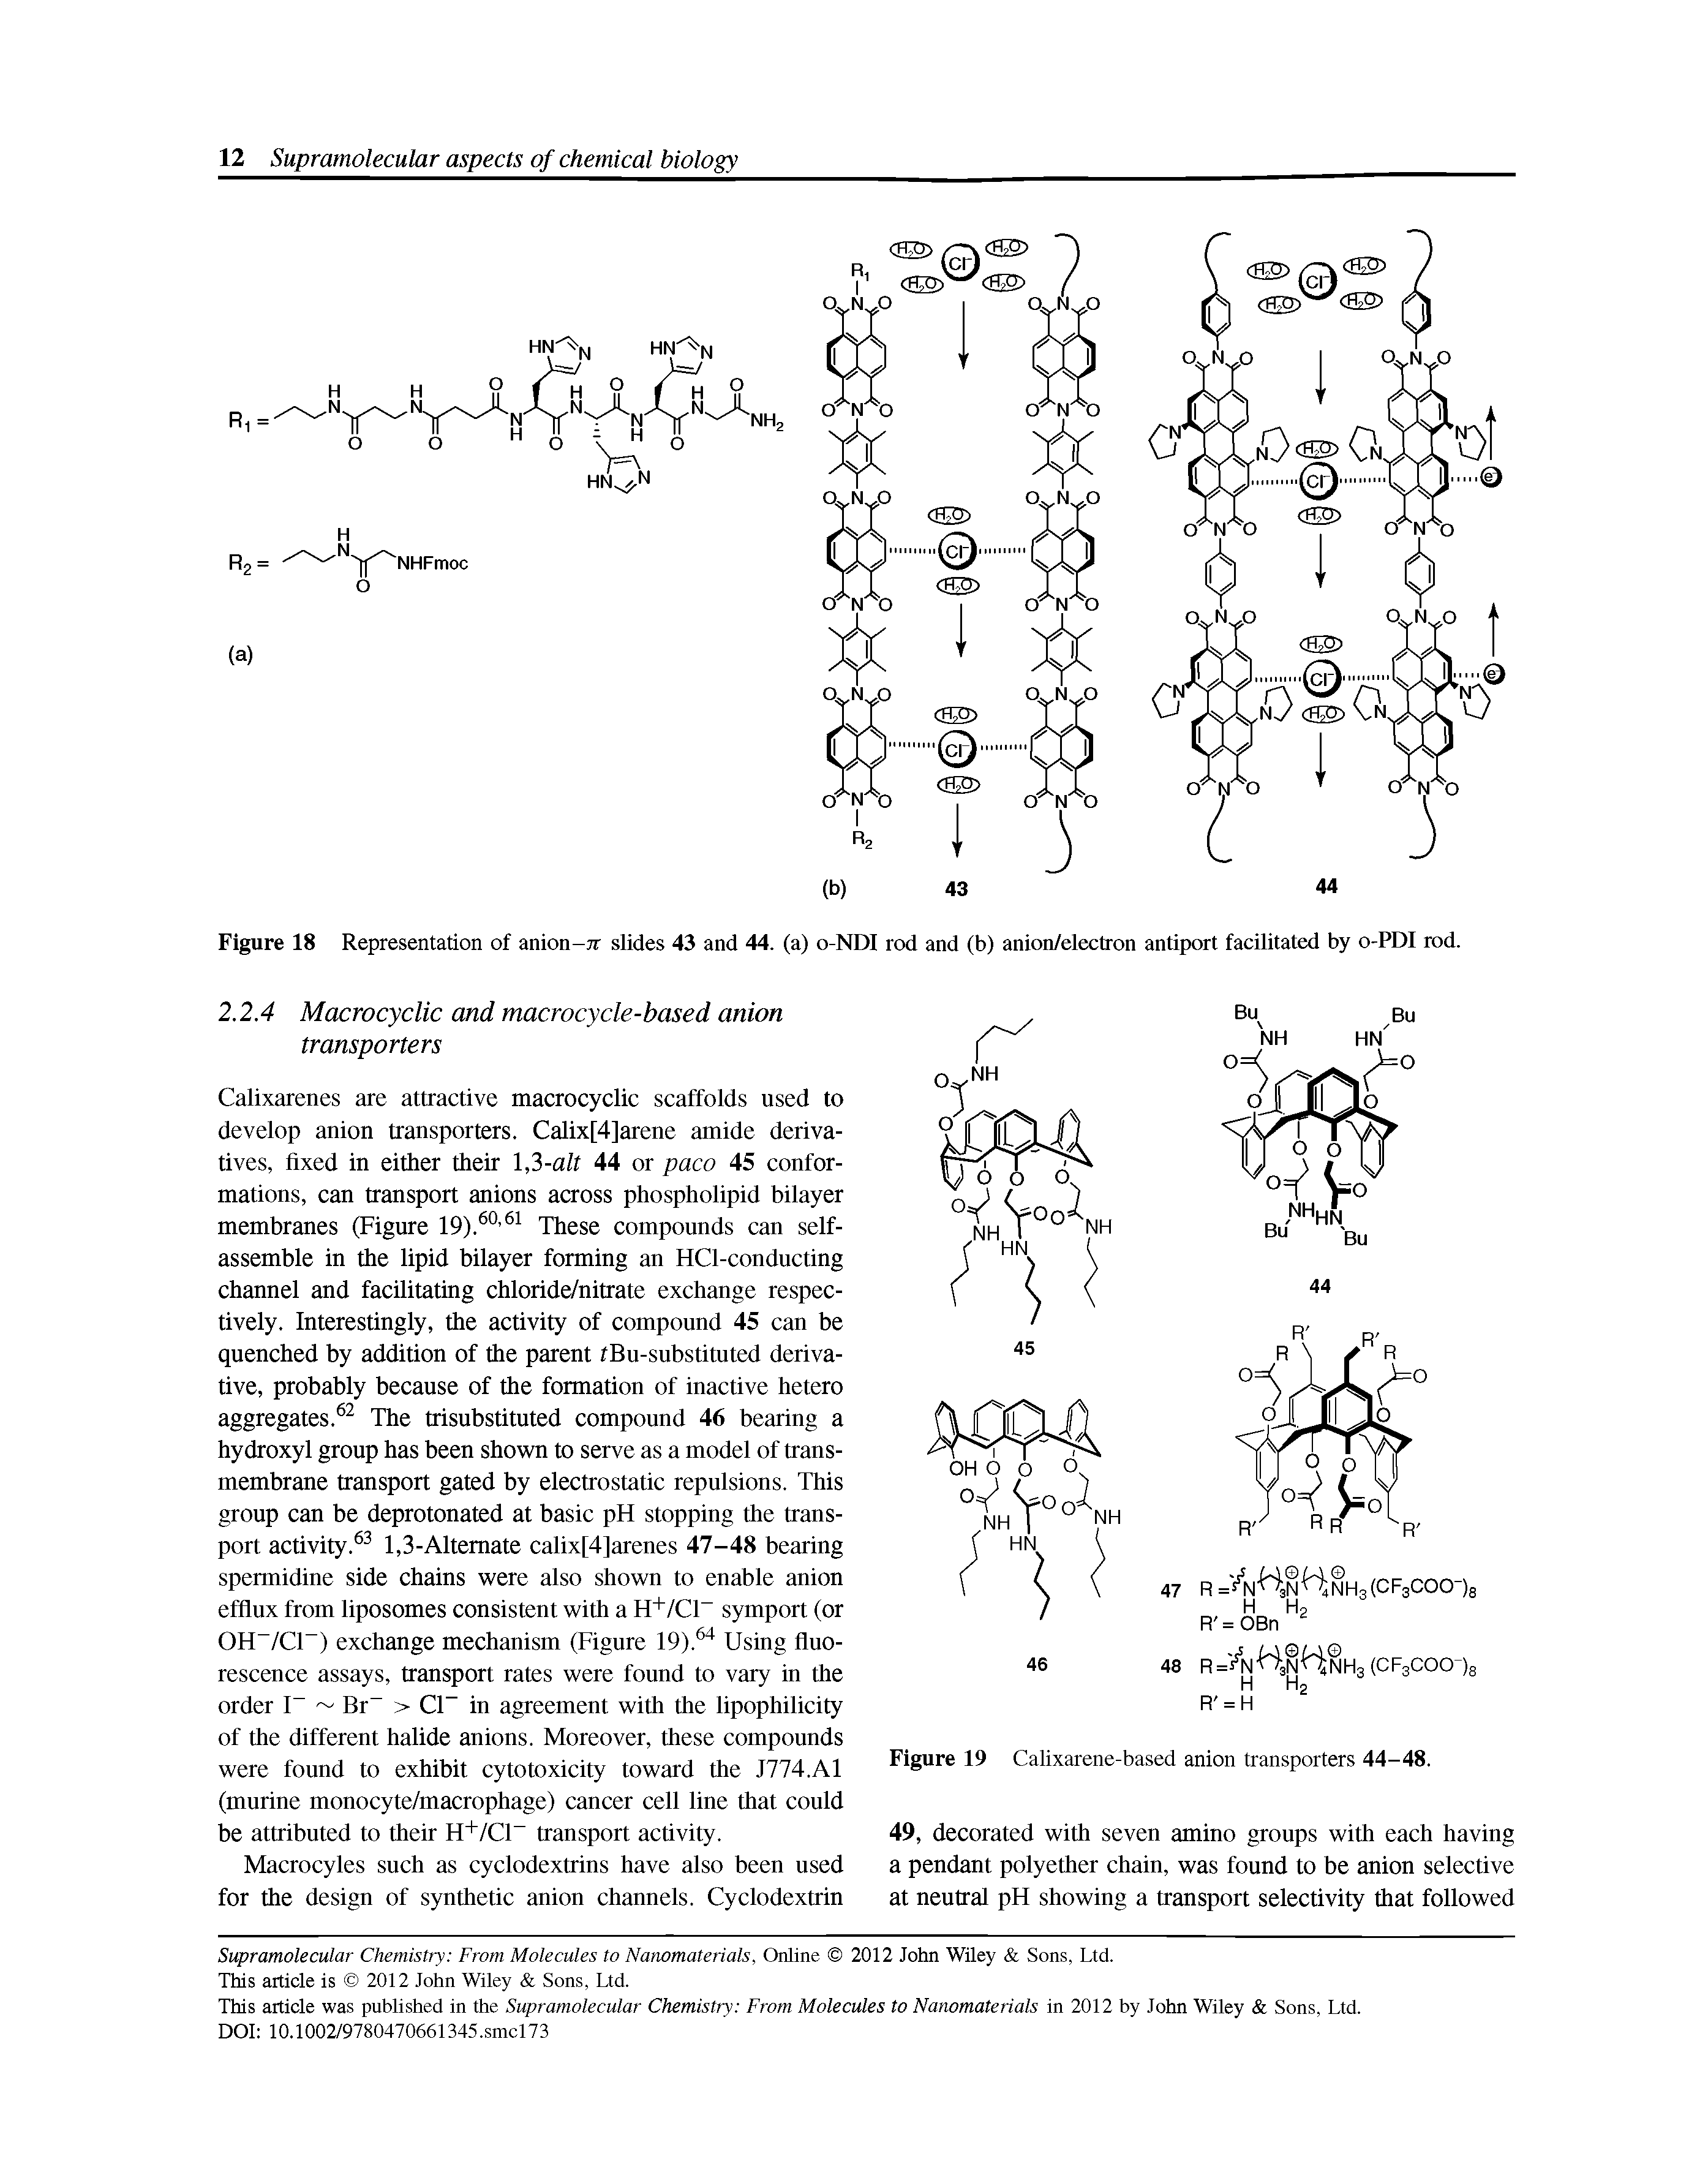 Figure 18 Representation of anion- 7r slides 43 and 44. (a) o-NDI rod and (b) anion/electron antiport facilitated by o-PDI rod.